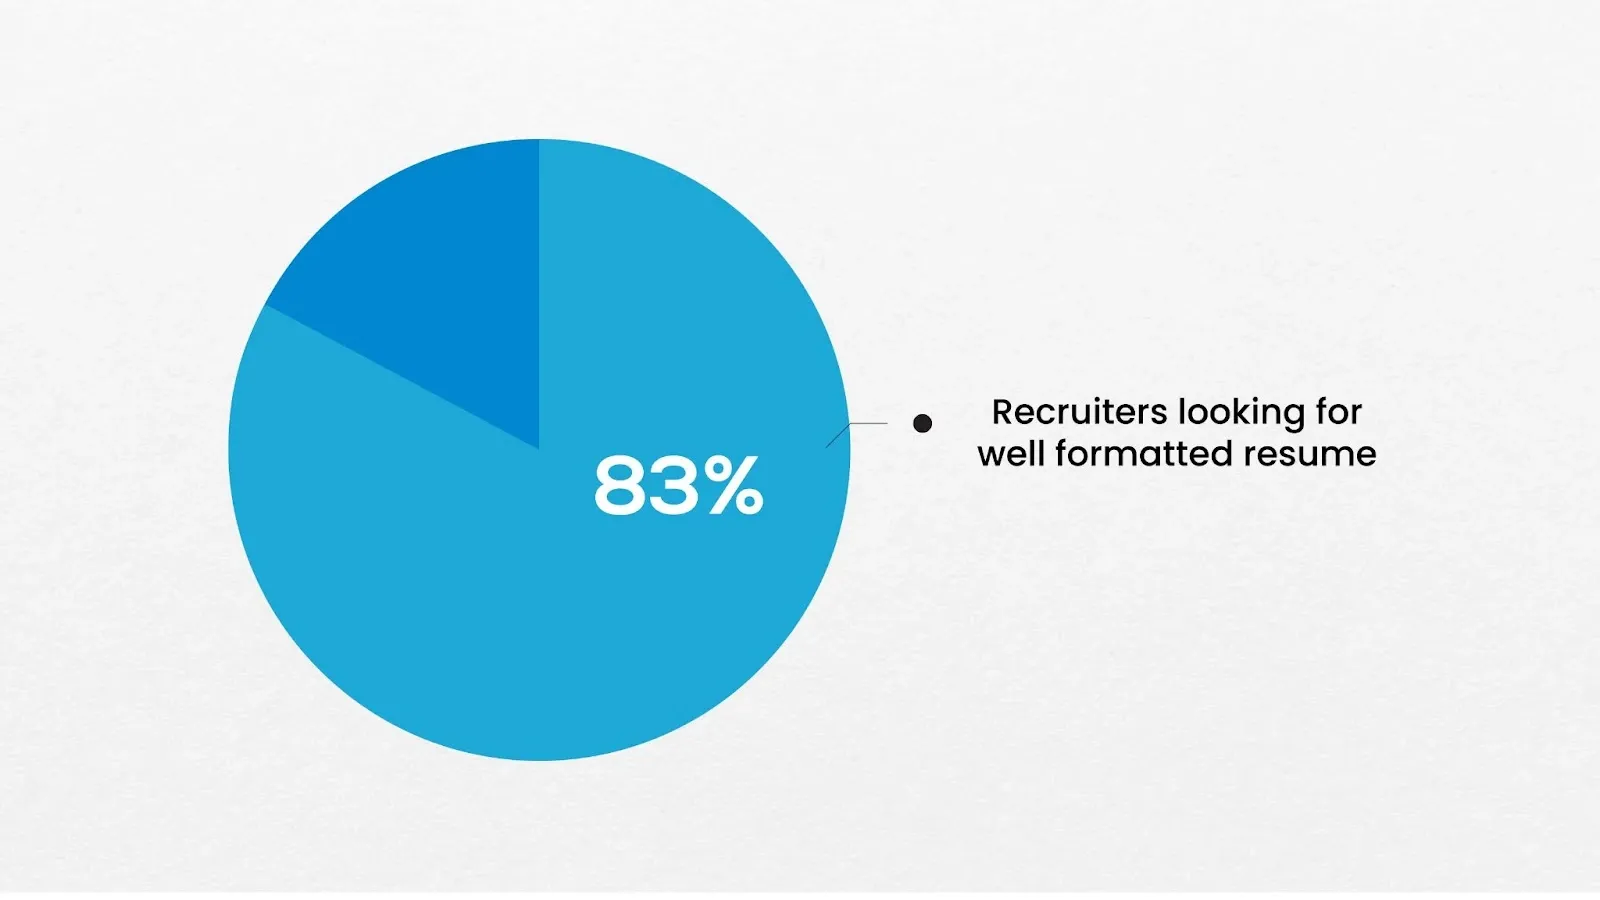 key statistics; blue pie chart representing percentage of recruiters